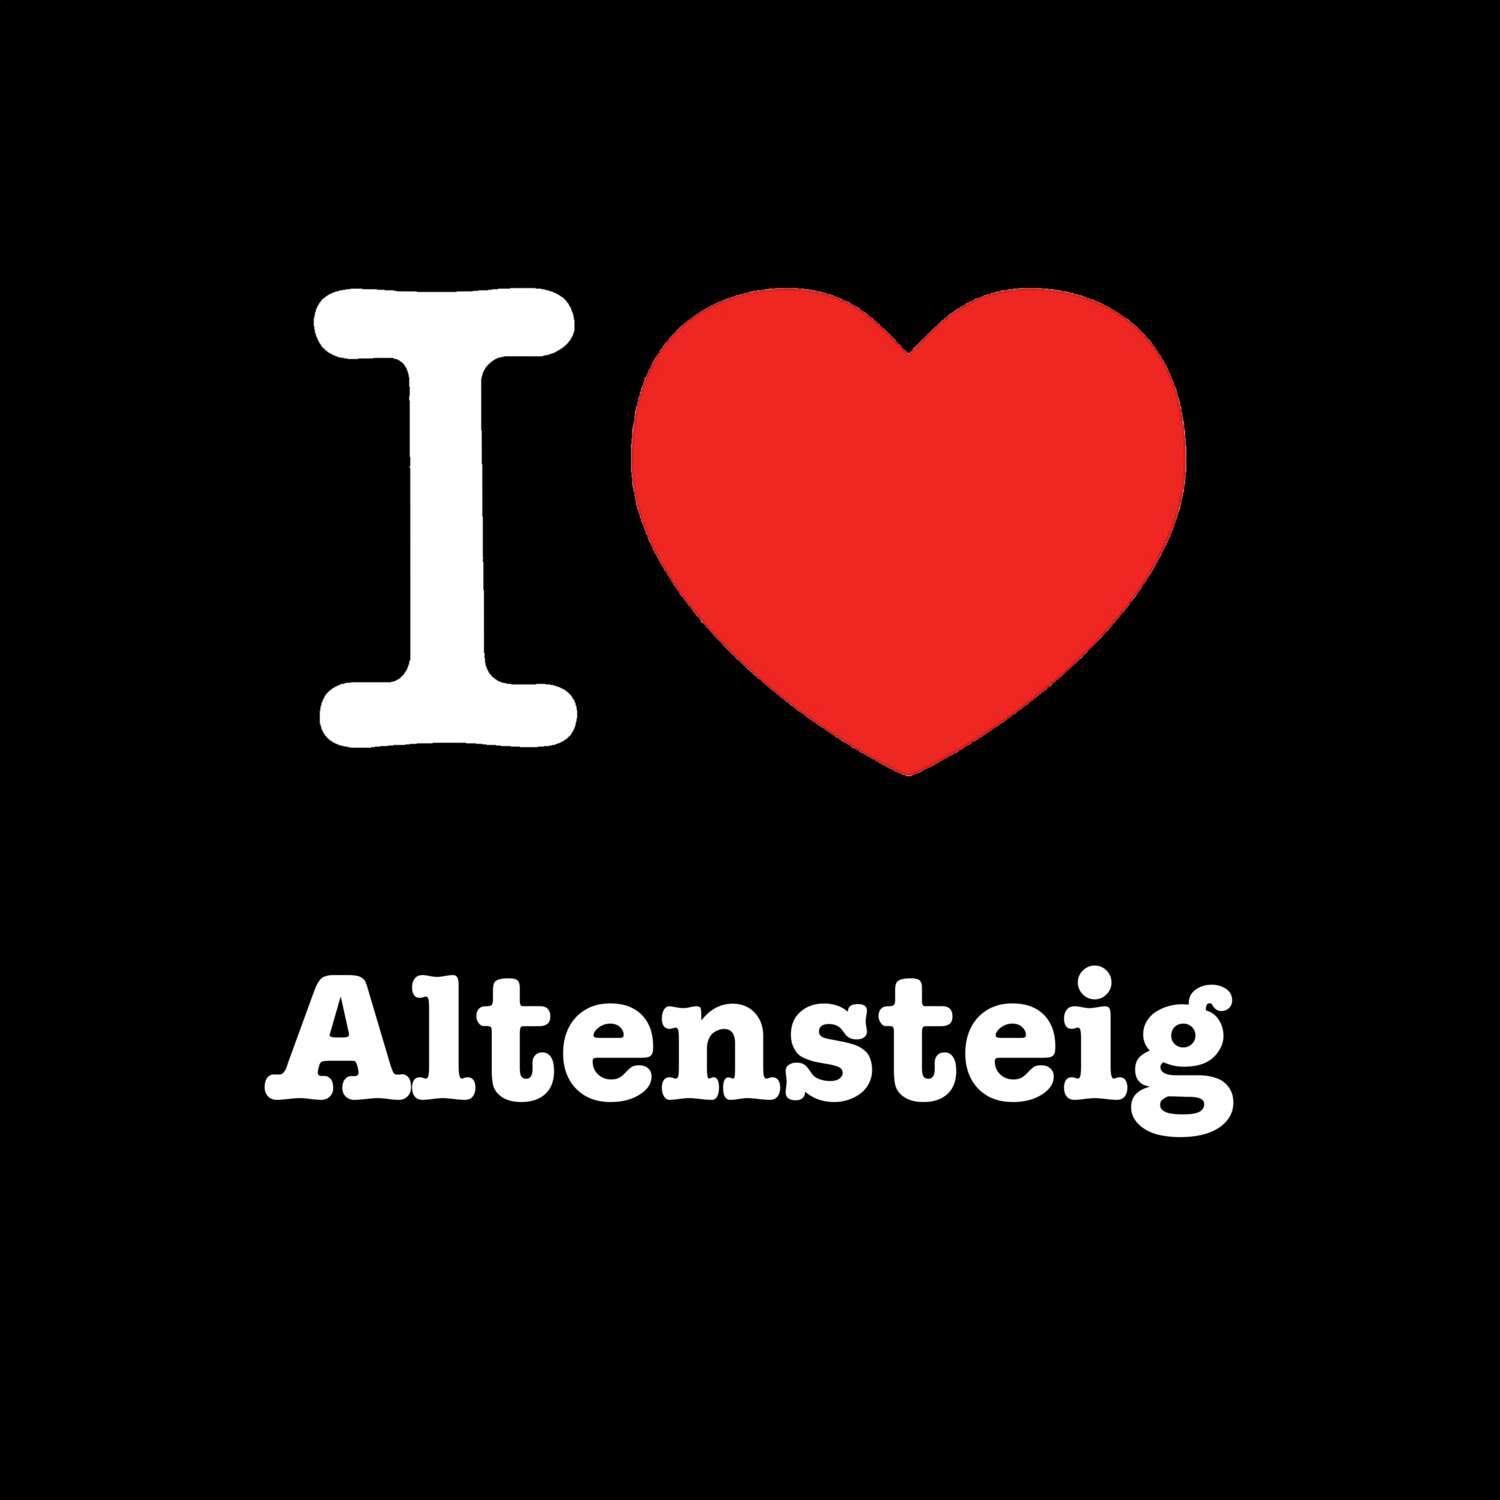 Altensteig T-Shirt »I love«